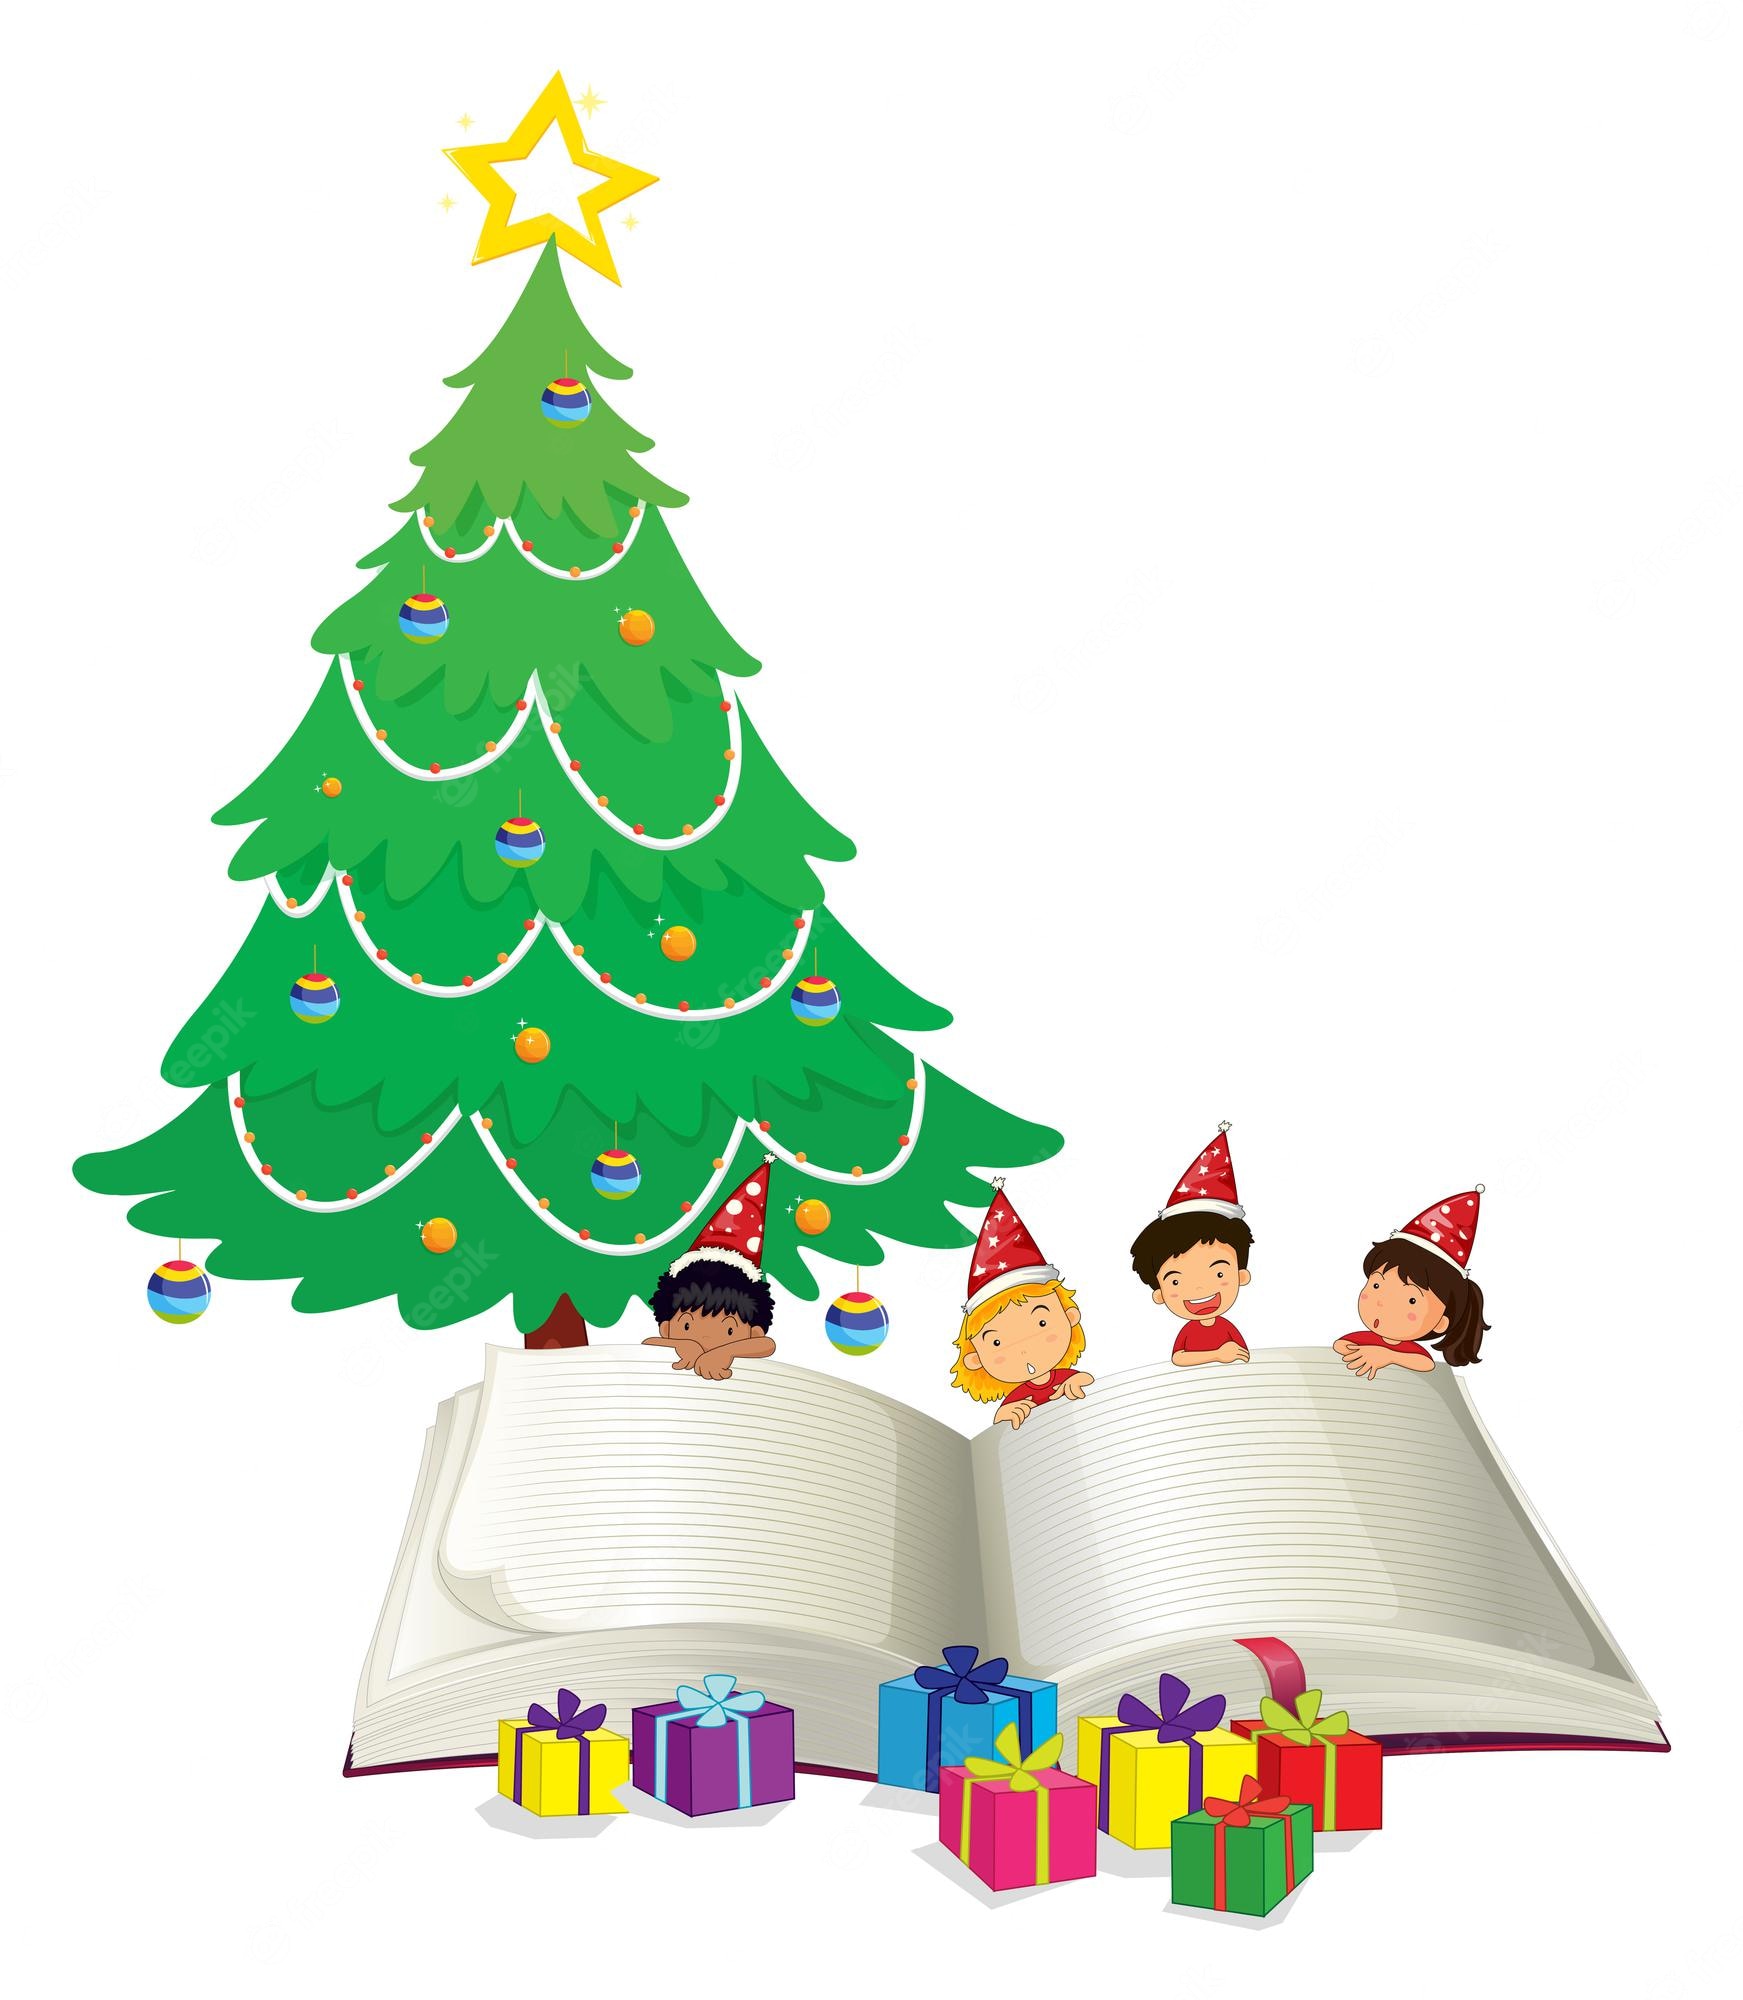 Christmas Tree Stock Illustrations, Royalty-Free Vector Graphics